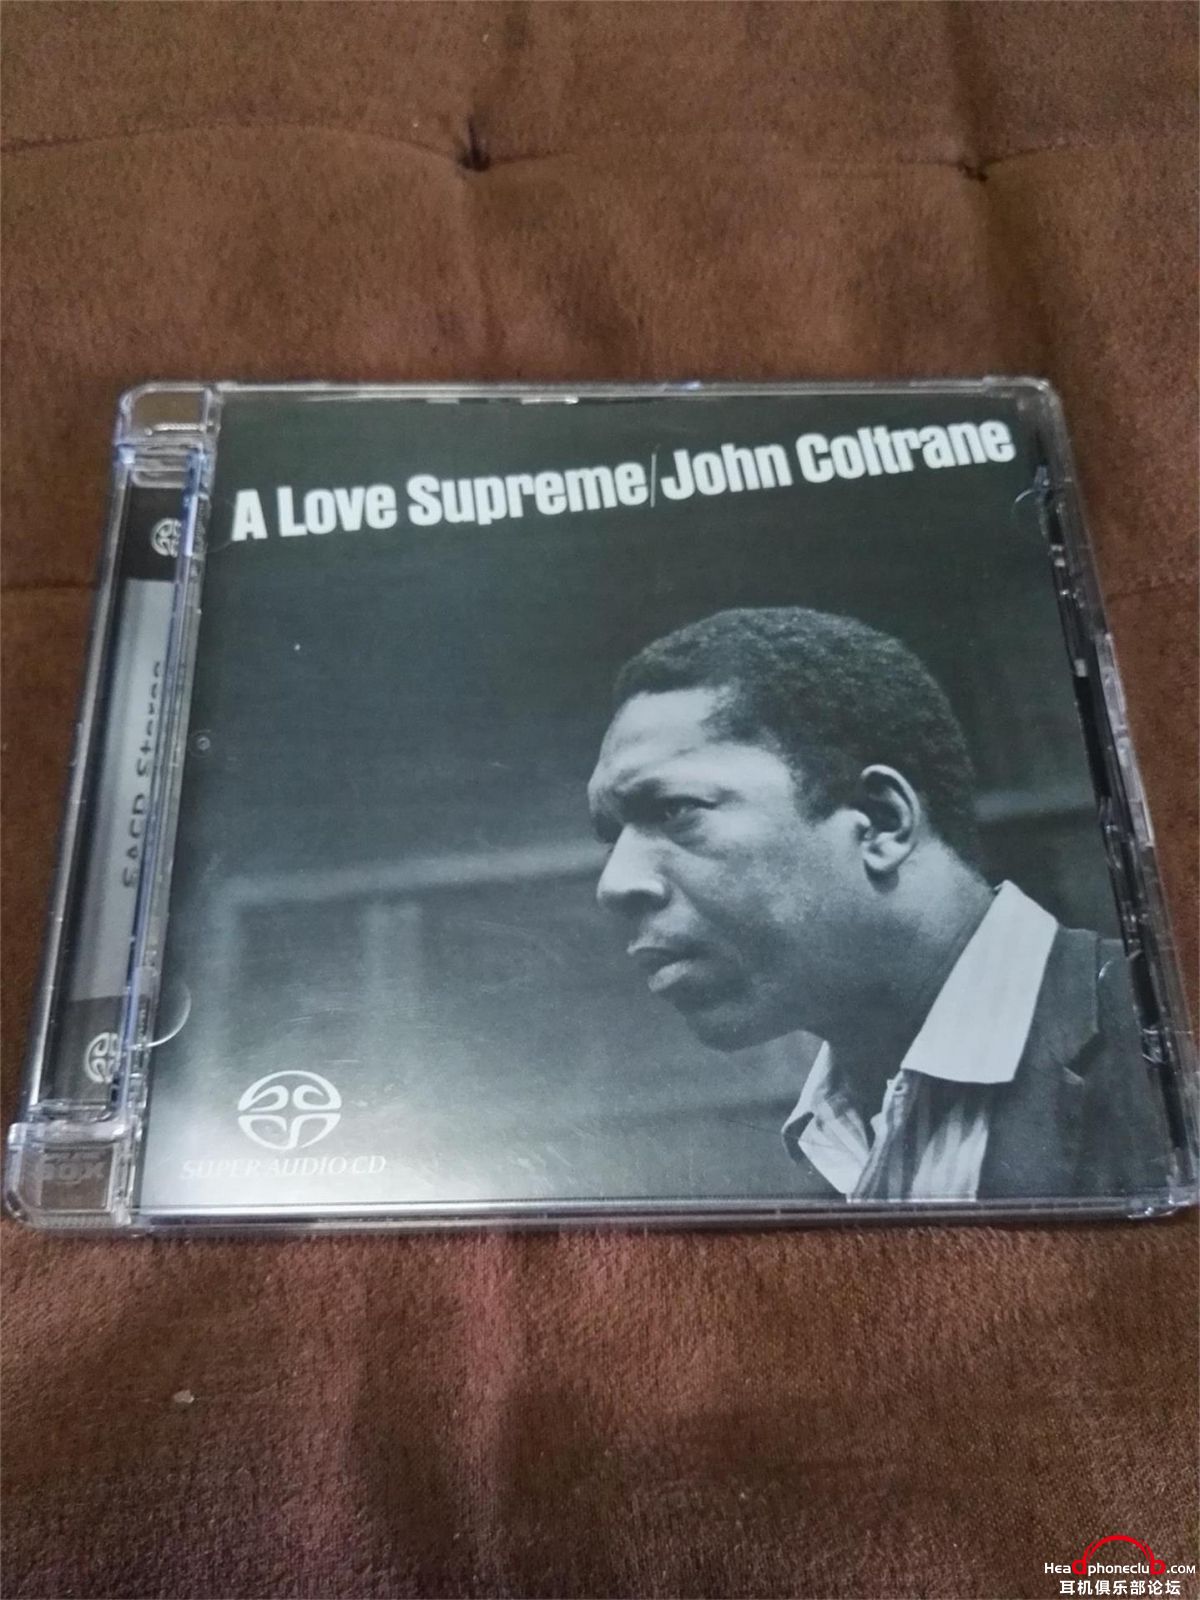 1077 JAZZ Impulse John Coltrane - A Love Supreme DSD SACD1.jpg